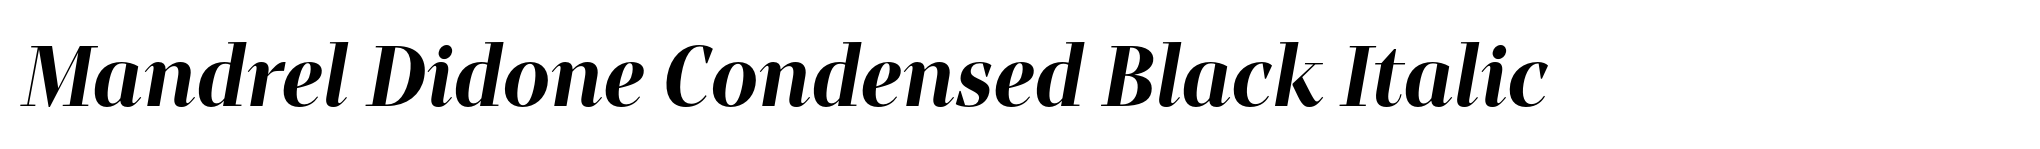 Mandrel Didone Condensed Black Italic image